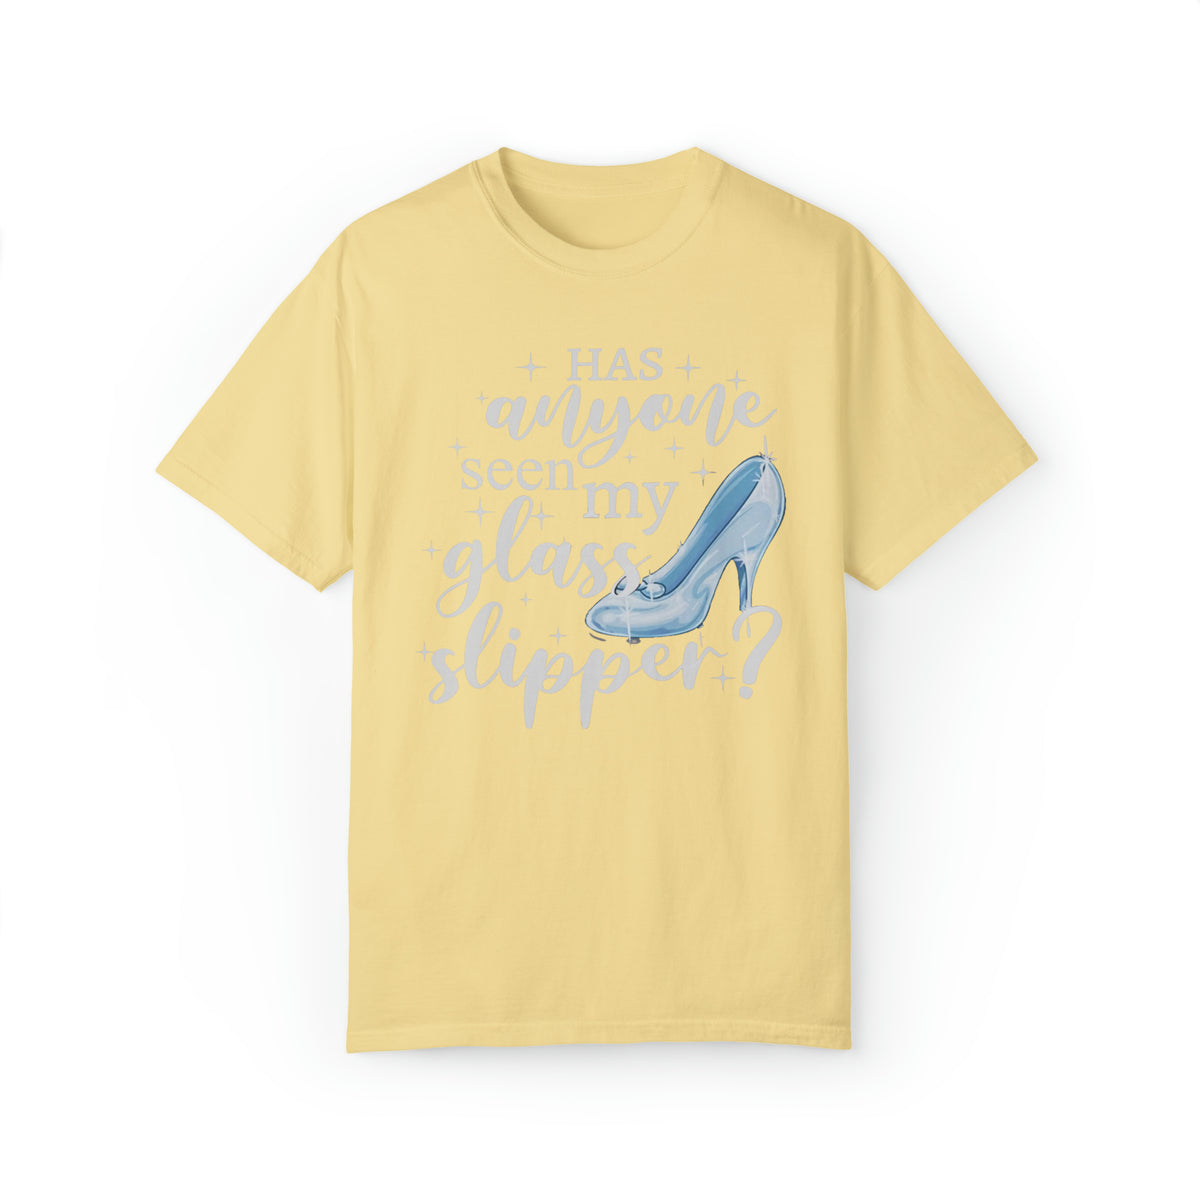 Has Anyone Seen My Glass Slipper? Comfort Colors Unisex Garment-Dyed T-shirt